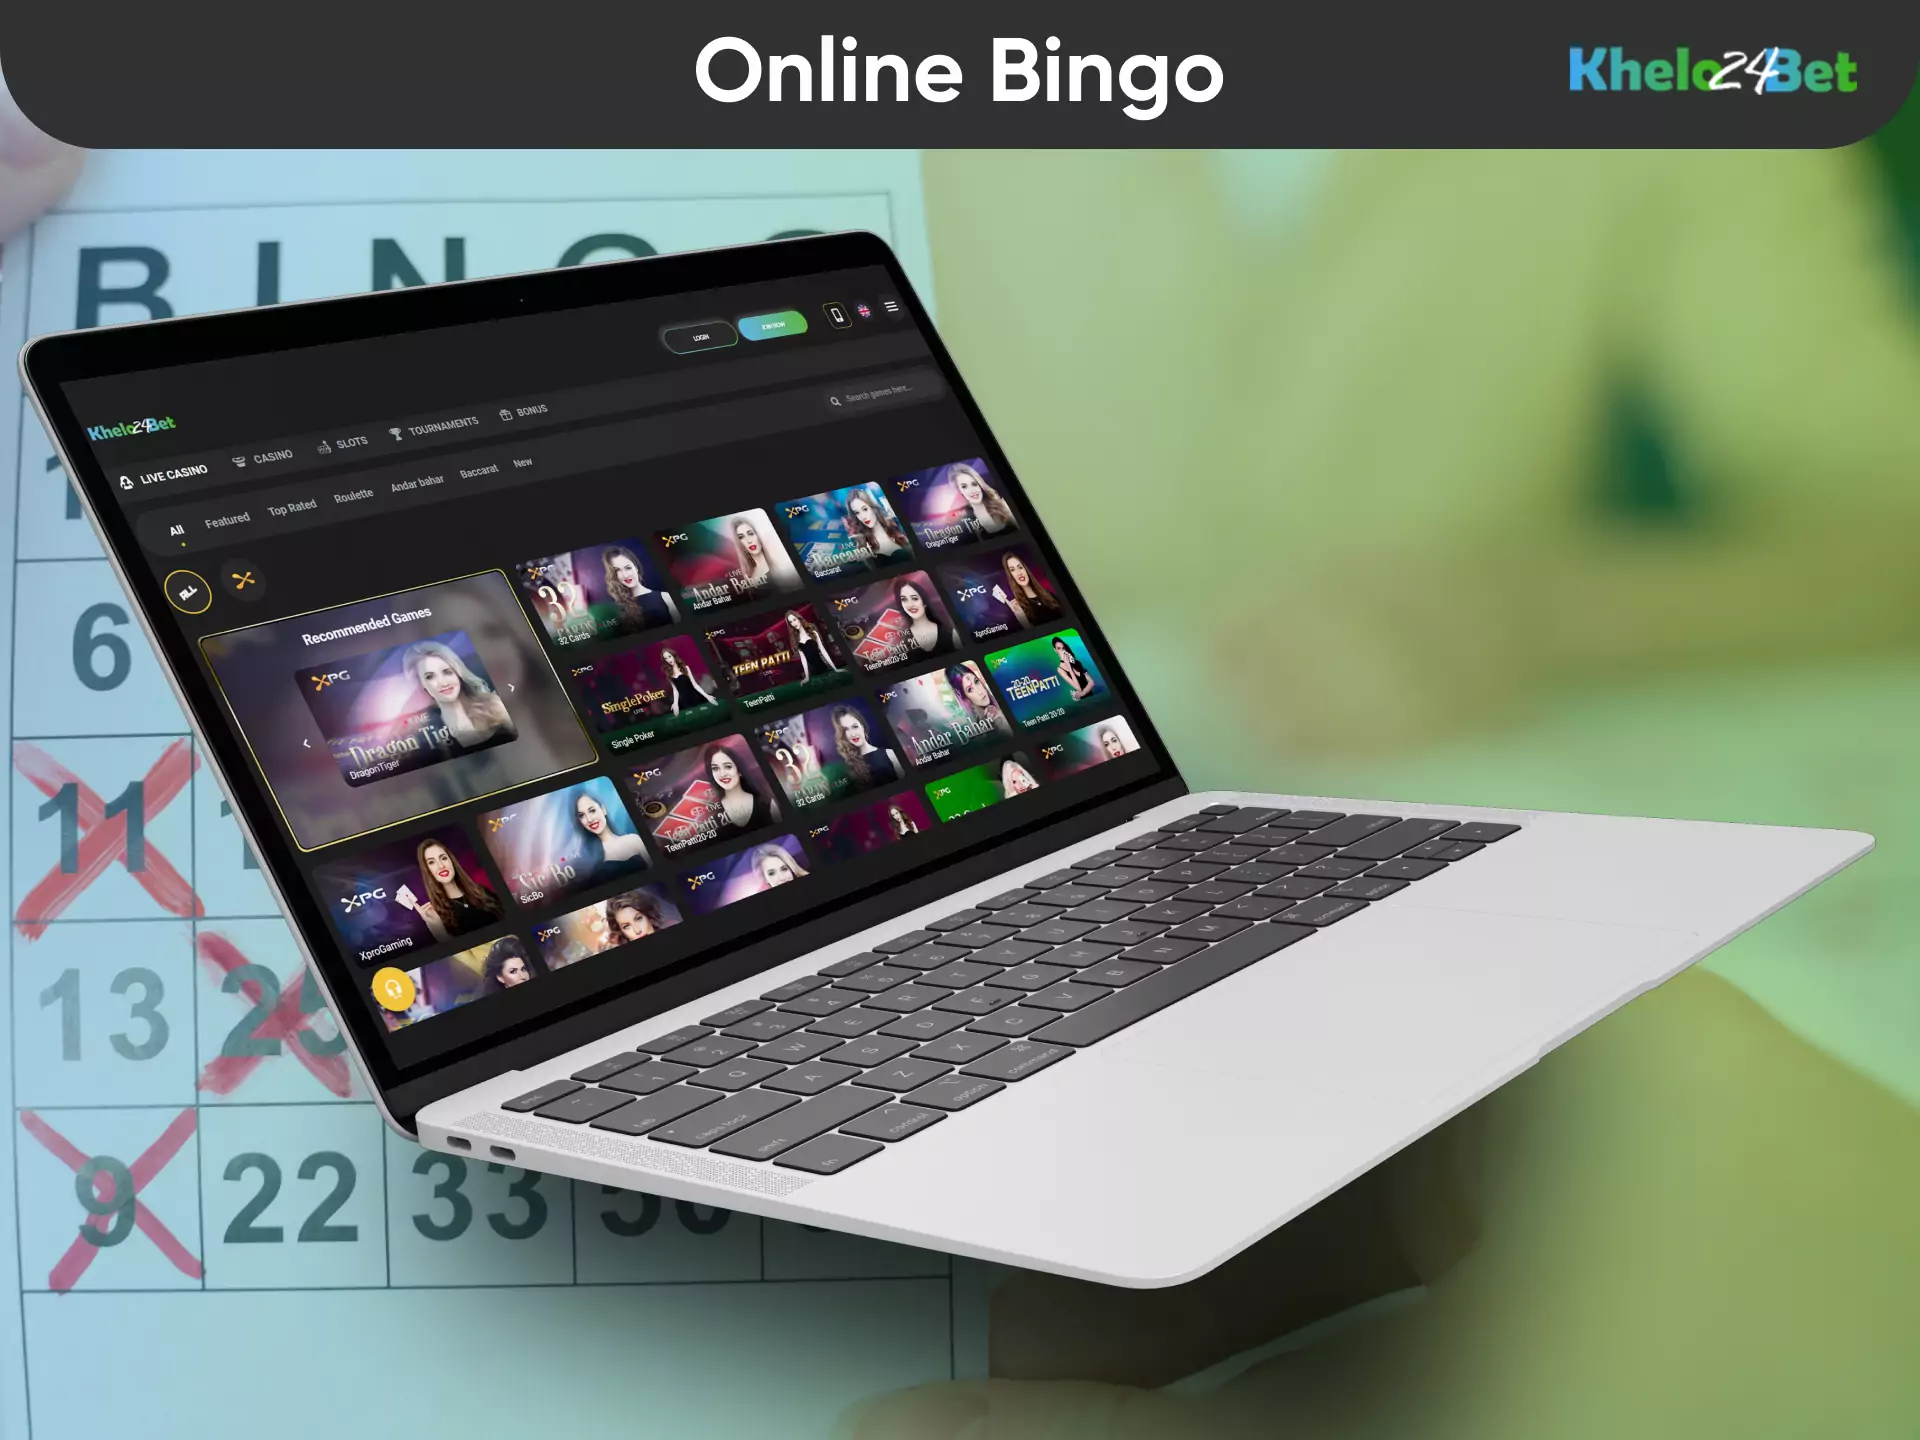 Play bingo games on the Khelo24bet site.